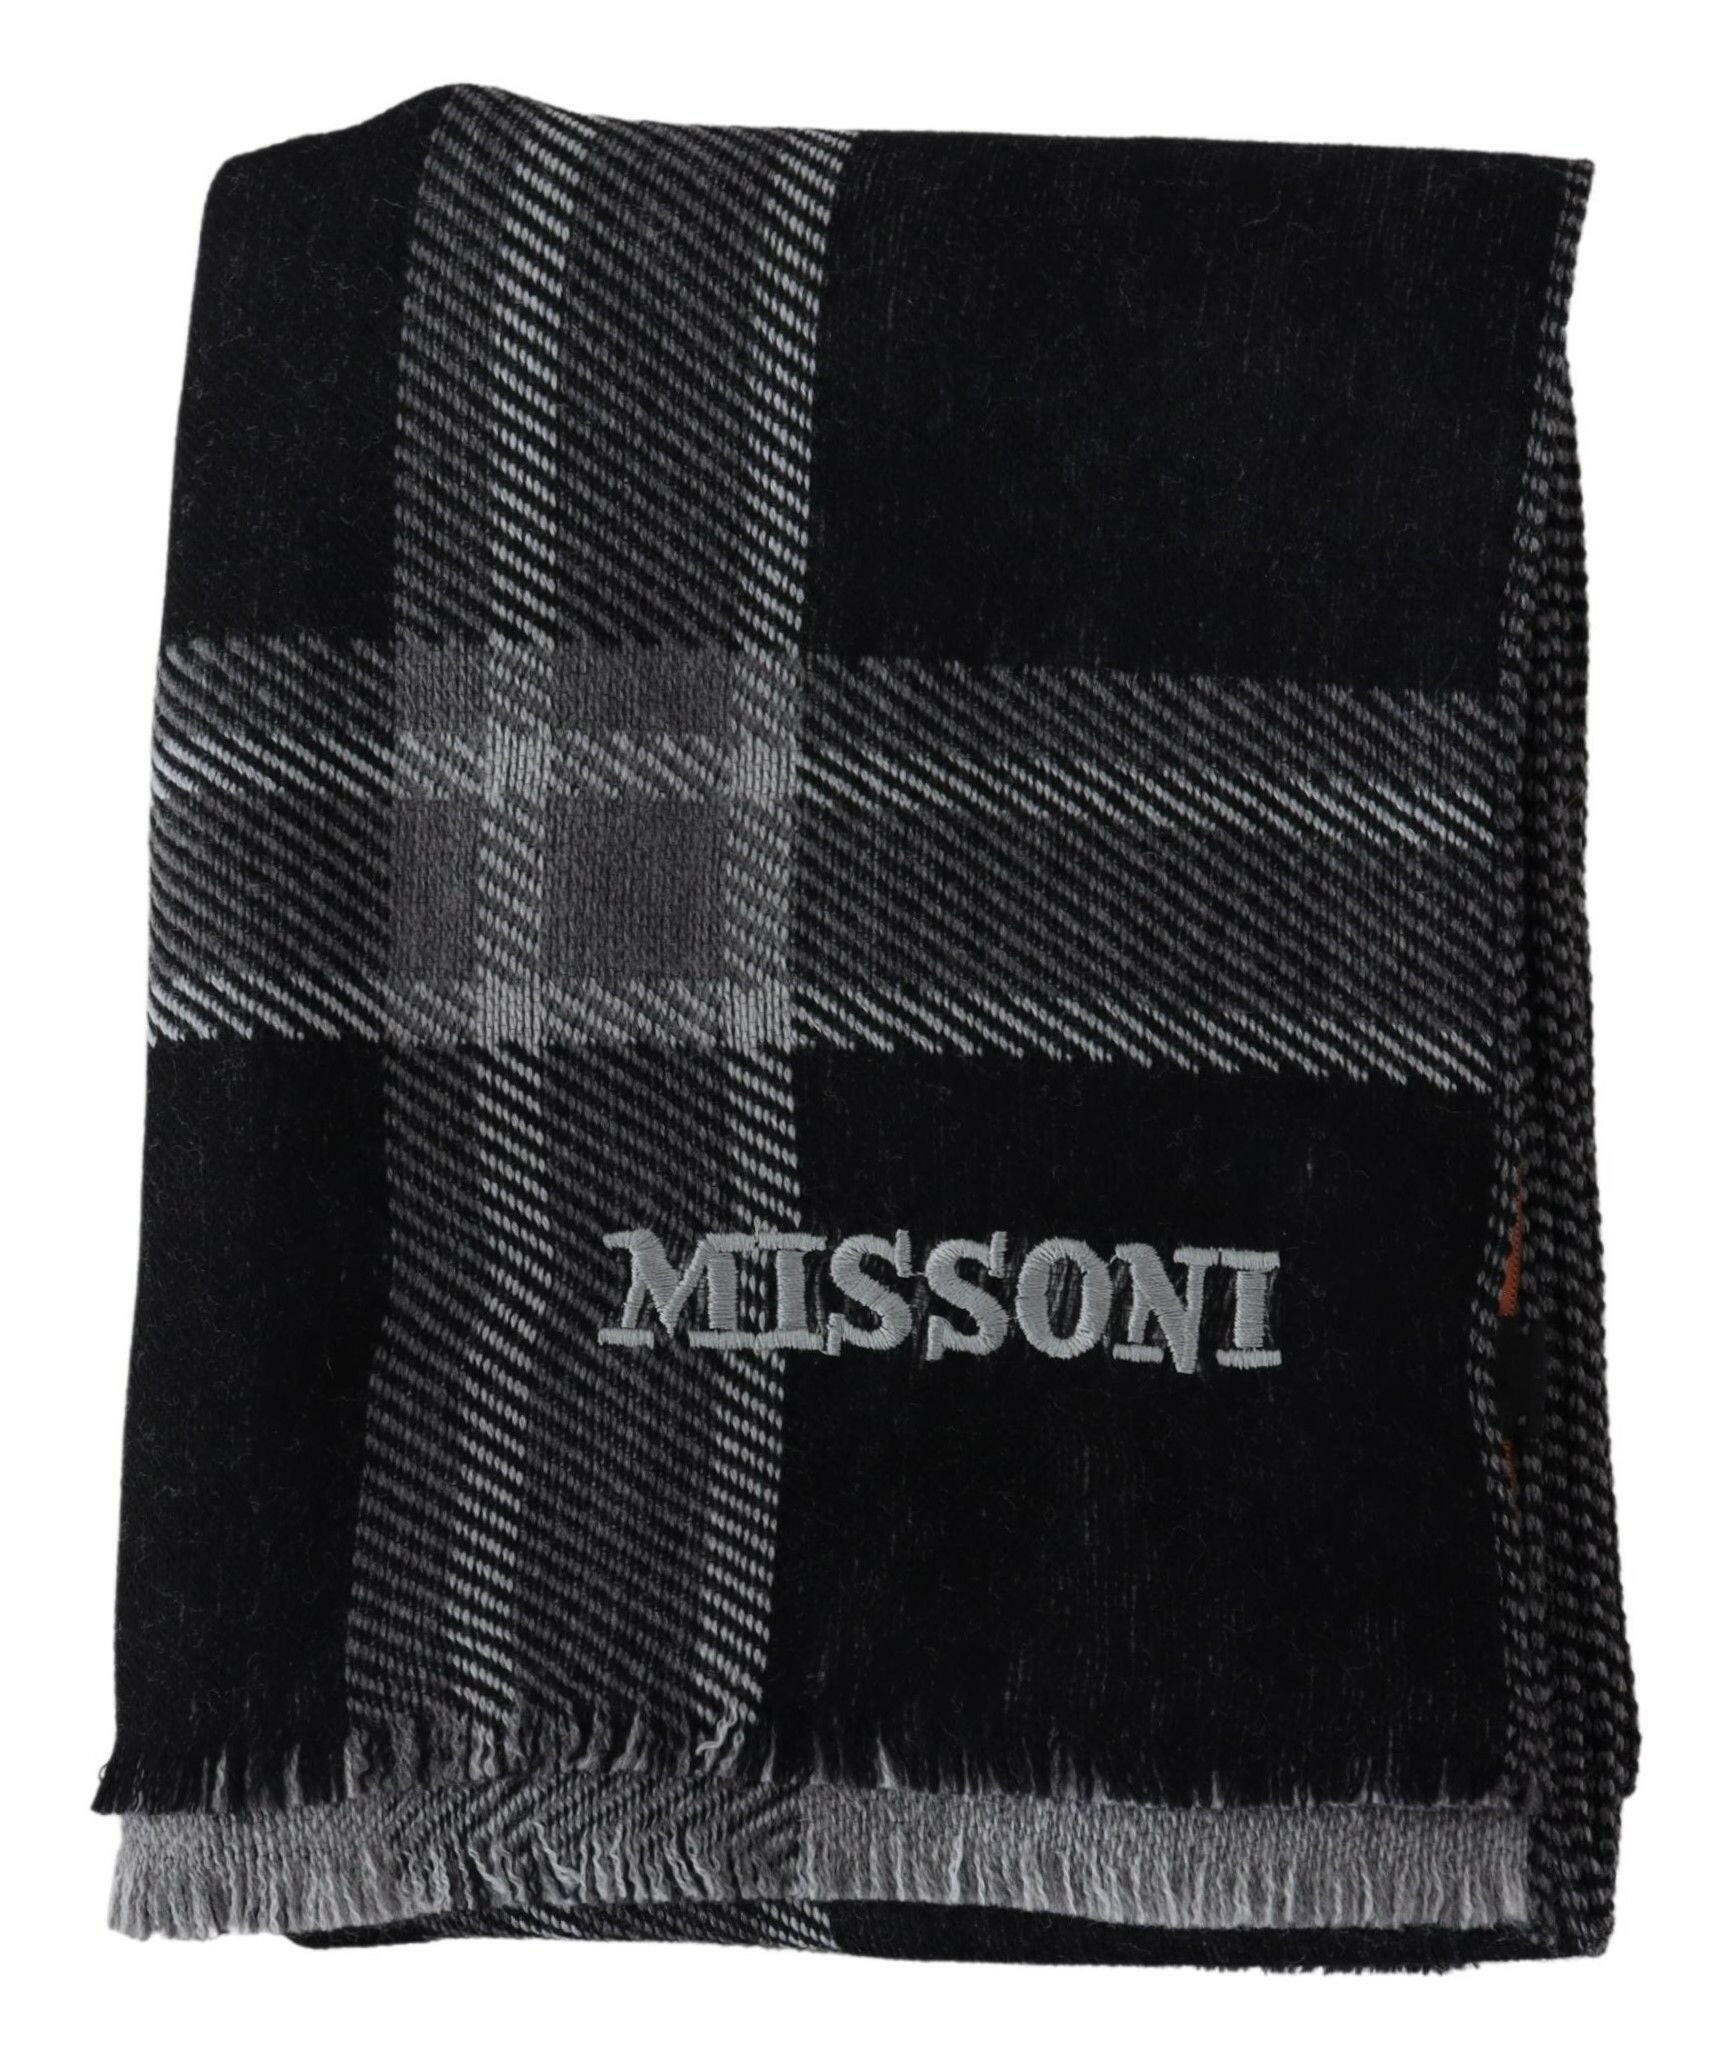 Missoni Black Plaid Wool Unisex Neck Wrap Scarf - GENUINE AUTHENTIC BRAND LLC  